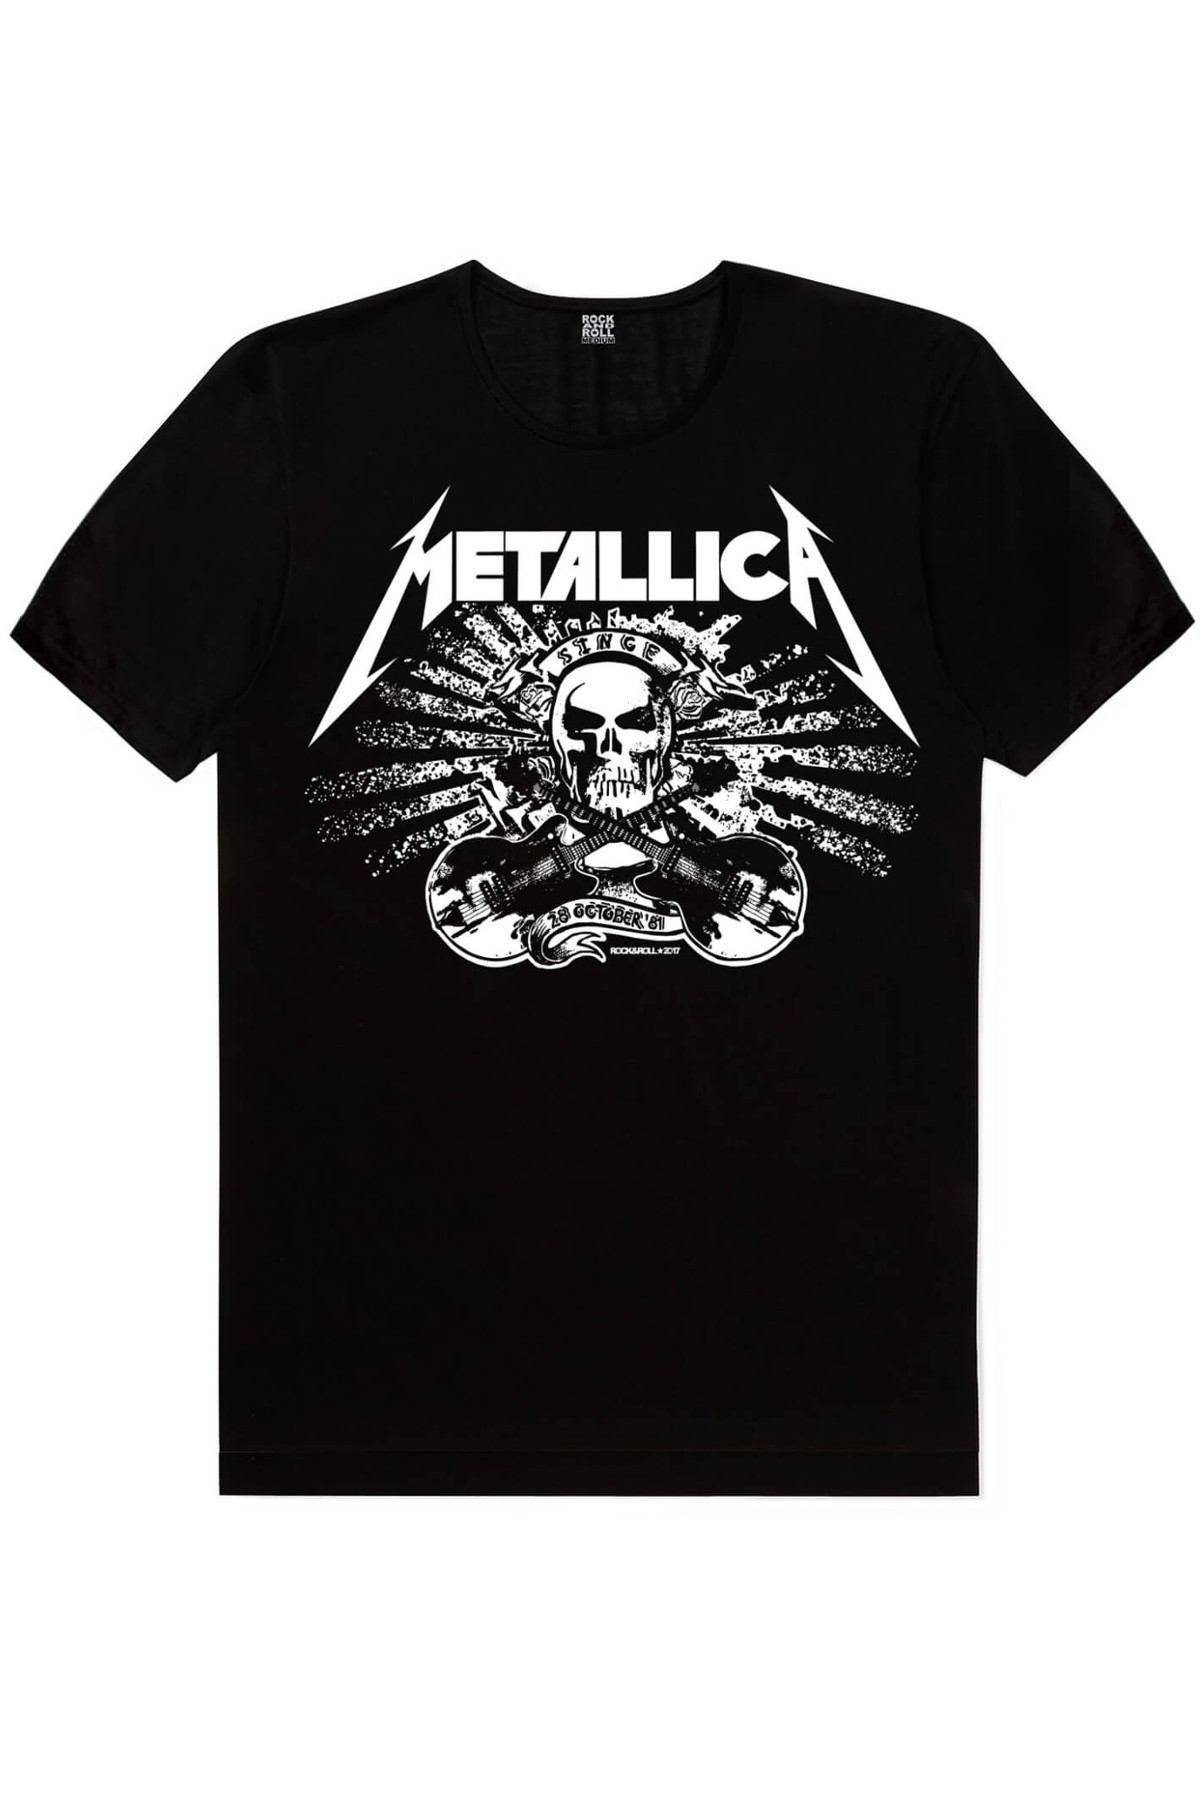 Motorcu Kurukafa, Metallica Kurukafa Kadın 2'li Eko Paket T-shirt